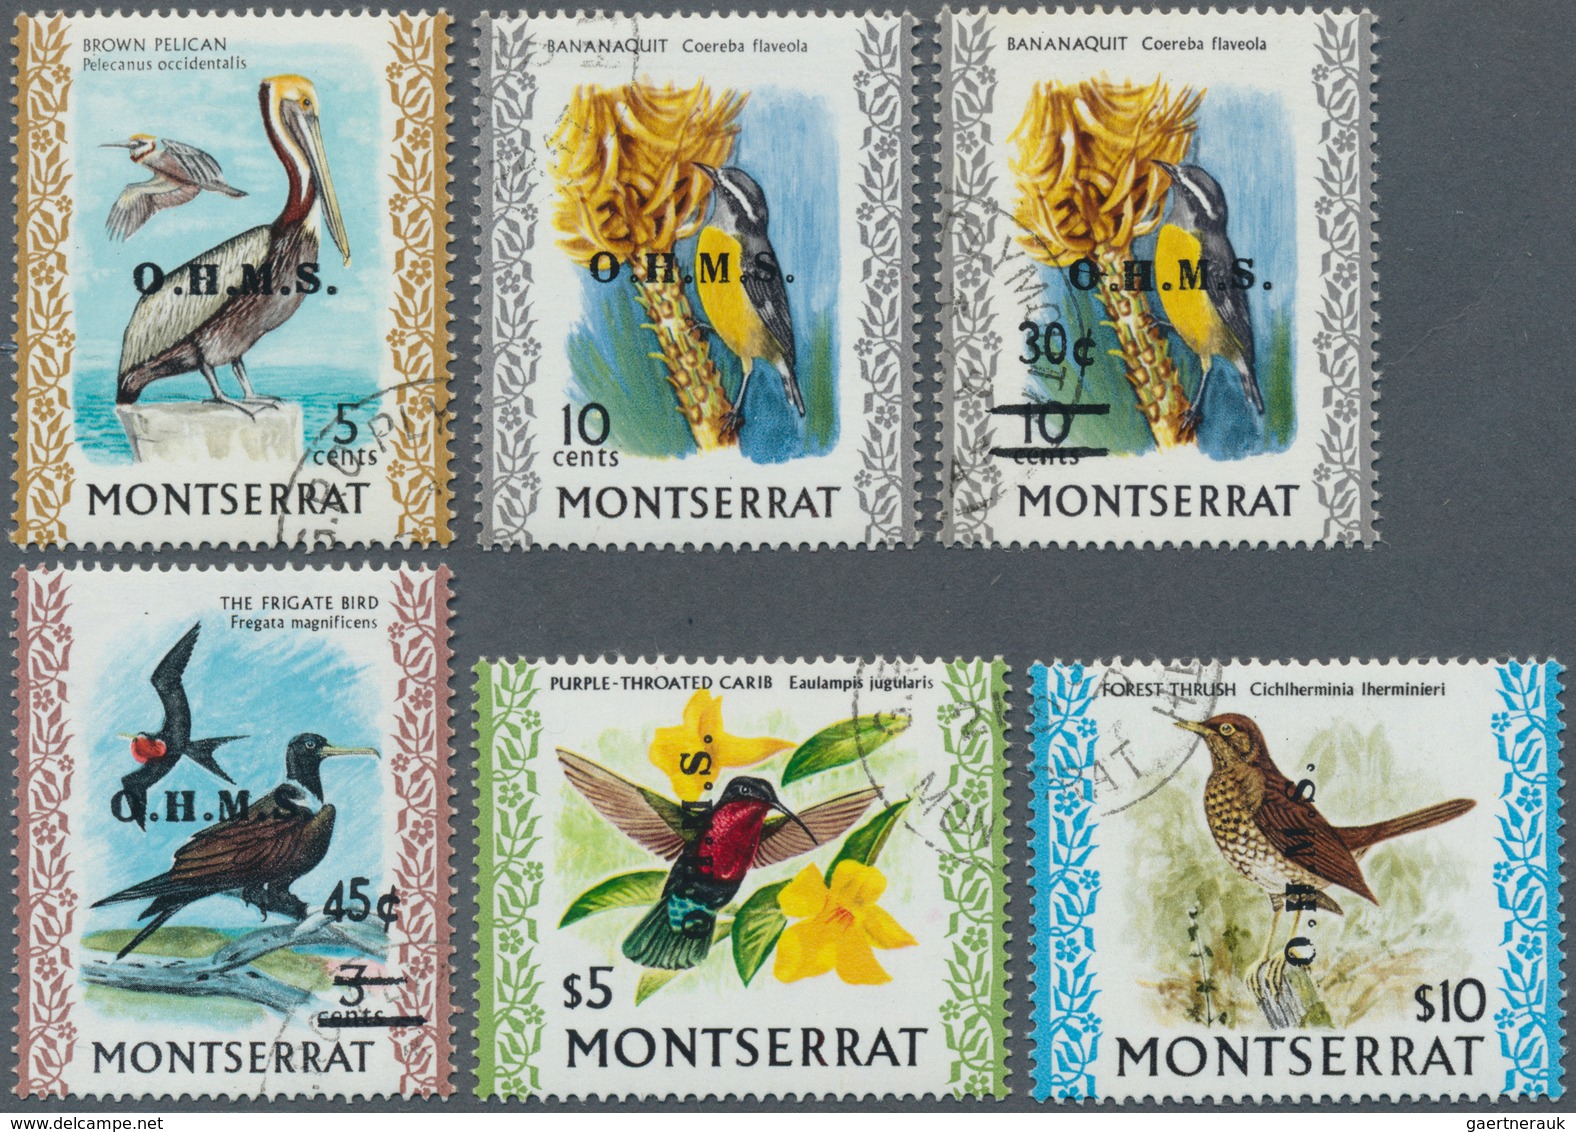 Montserrat - Dienstmarken: 1976, O.H.M.S. Overprints On "Birds", Complete Set Of Six Values, Neatly - Montserrat